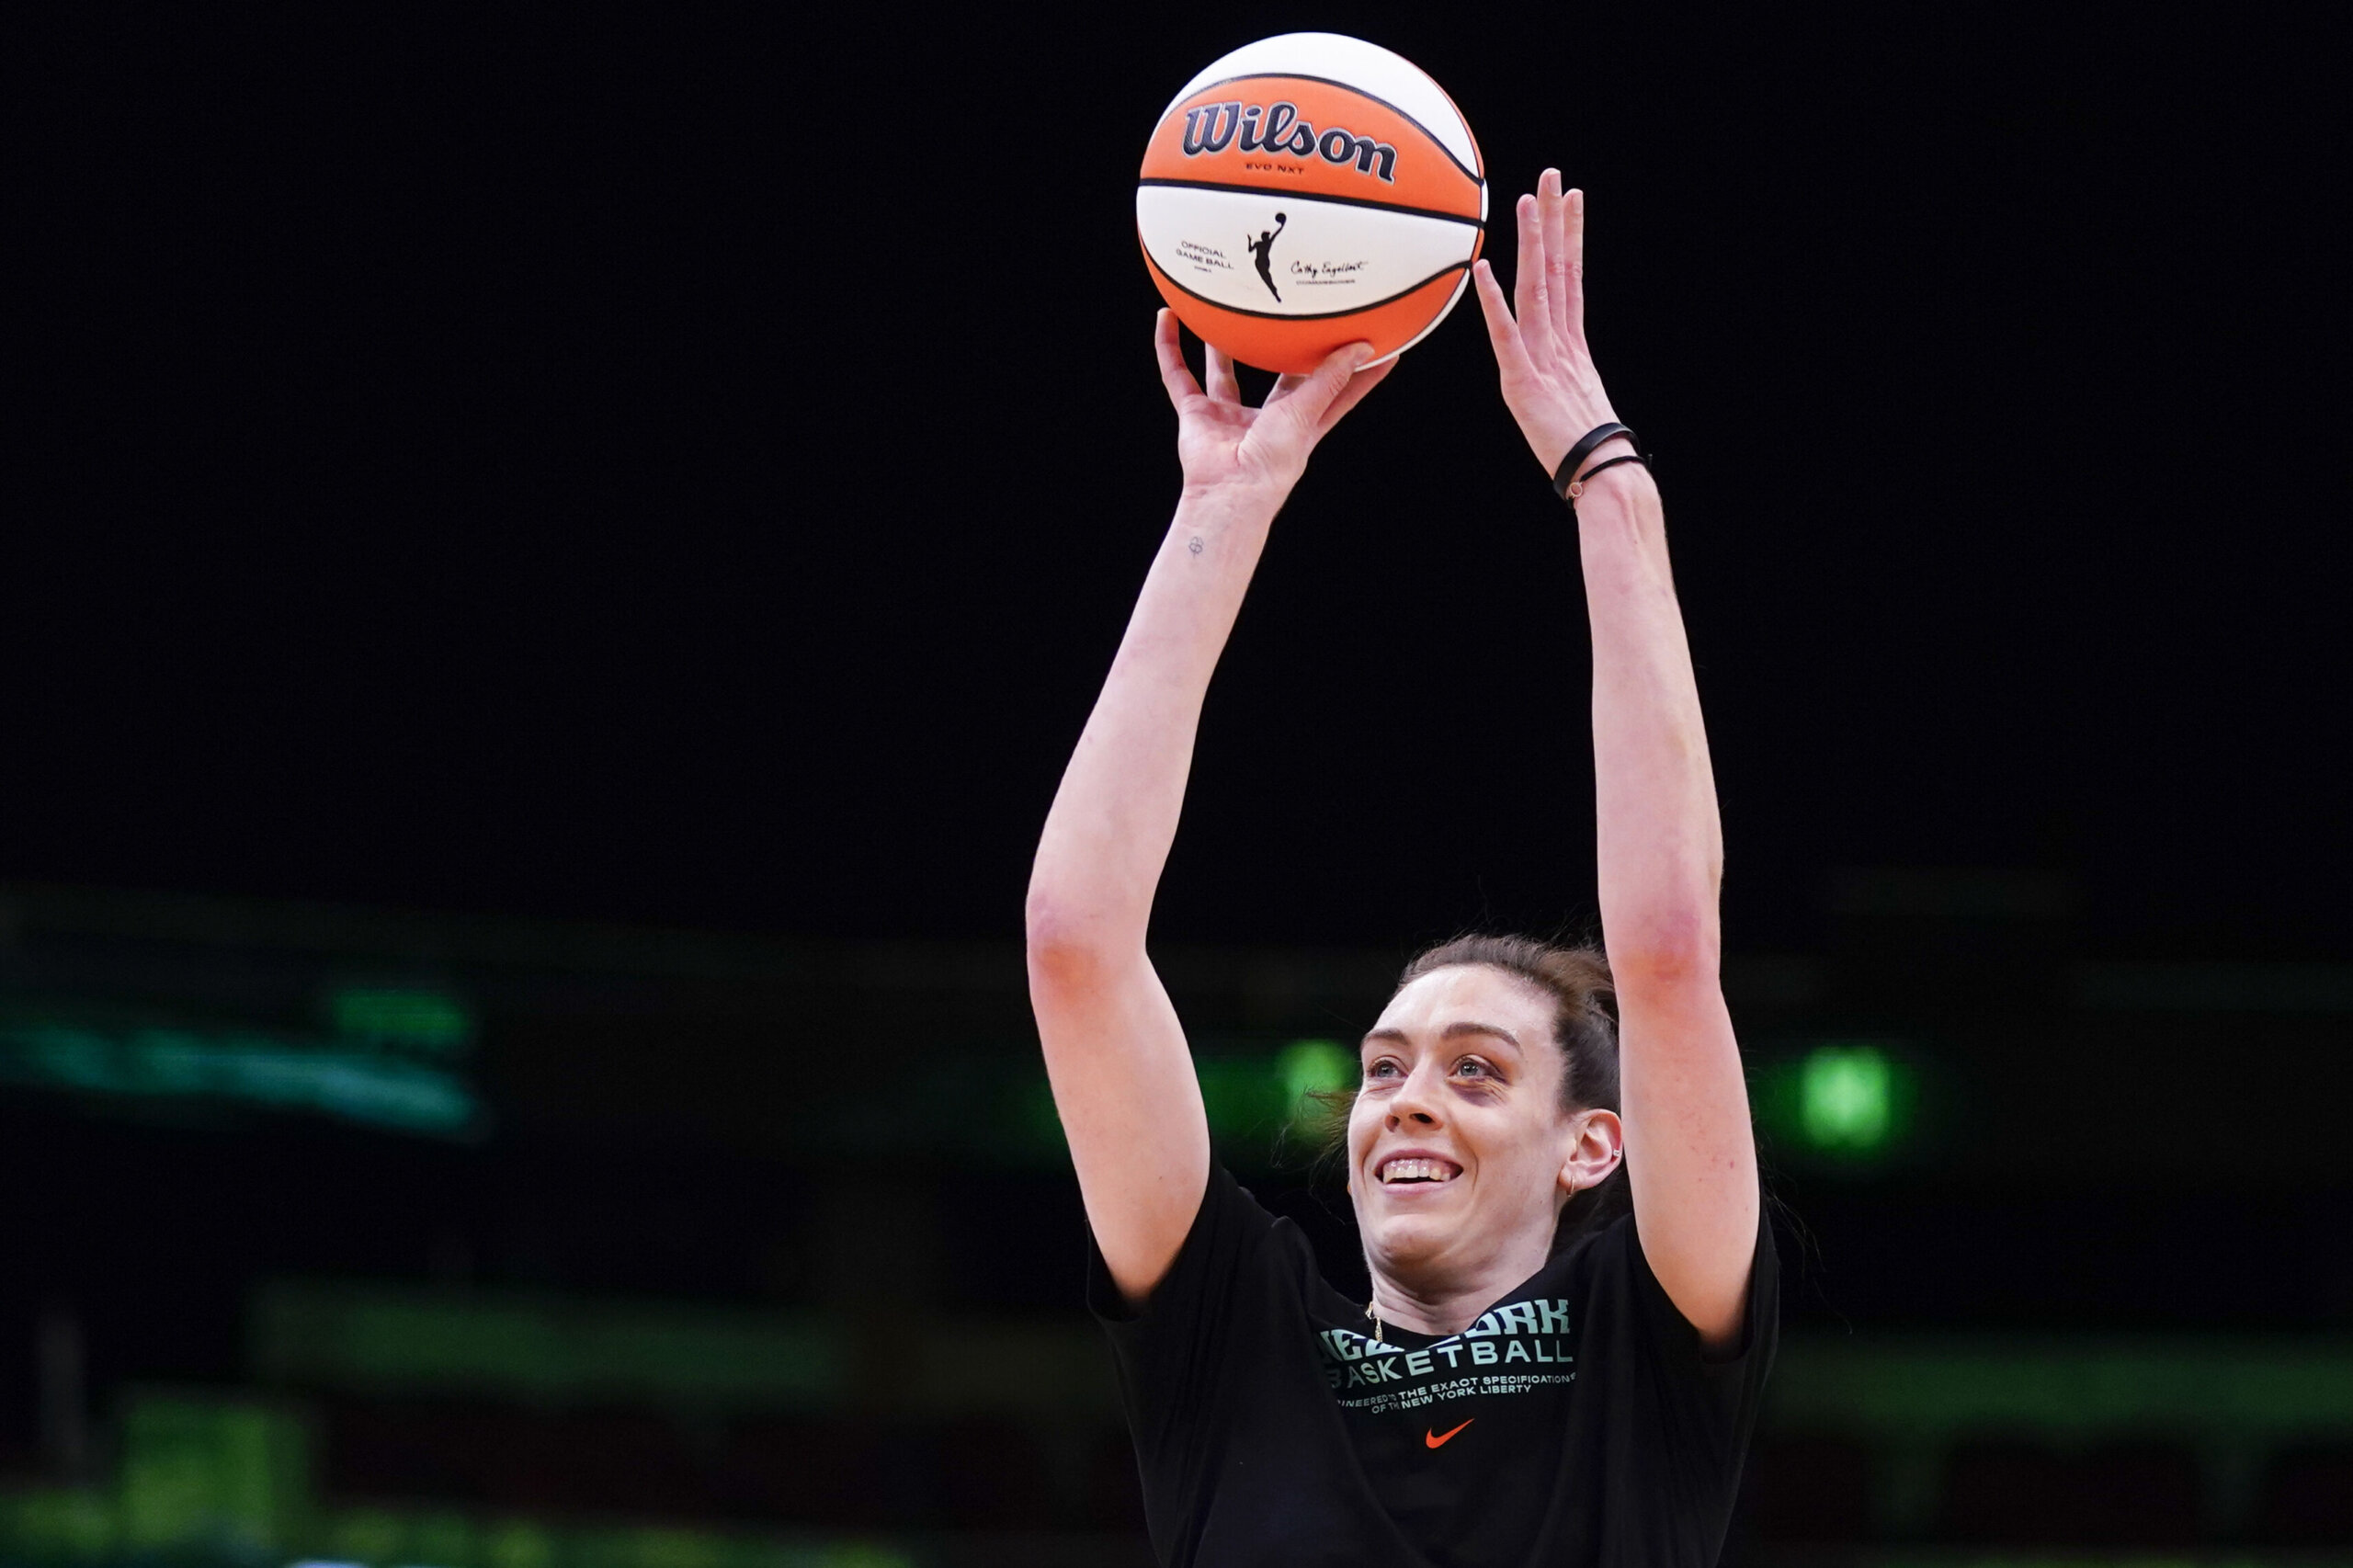 Sabrina Ionescu hits game-winning 3 to start the WNBA season